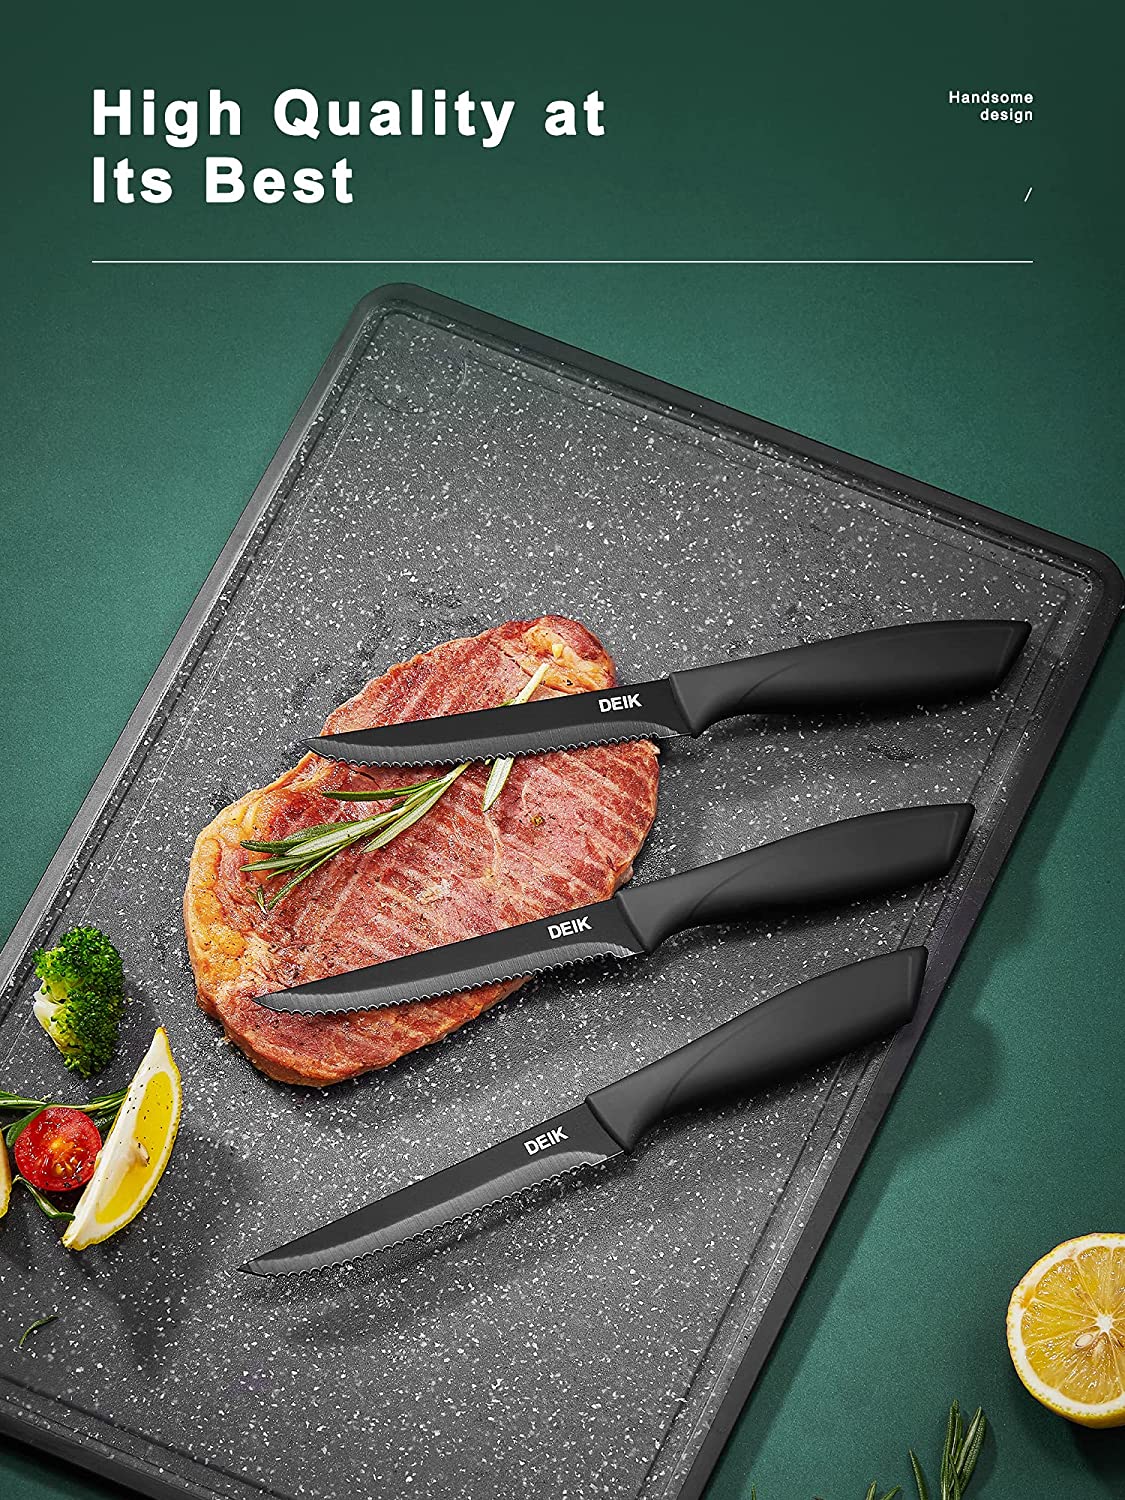 Deik | Steak Knives, Steak Knives Set of 8, Premium Stainless Steel Steak Knife Set, Super Sharp Serrated Steak Knife with Gift Box, BO Oxidation for Anti-rusting and Sharp